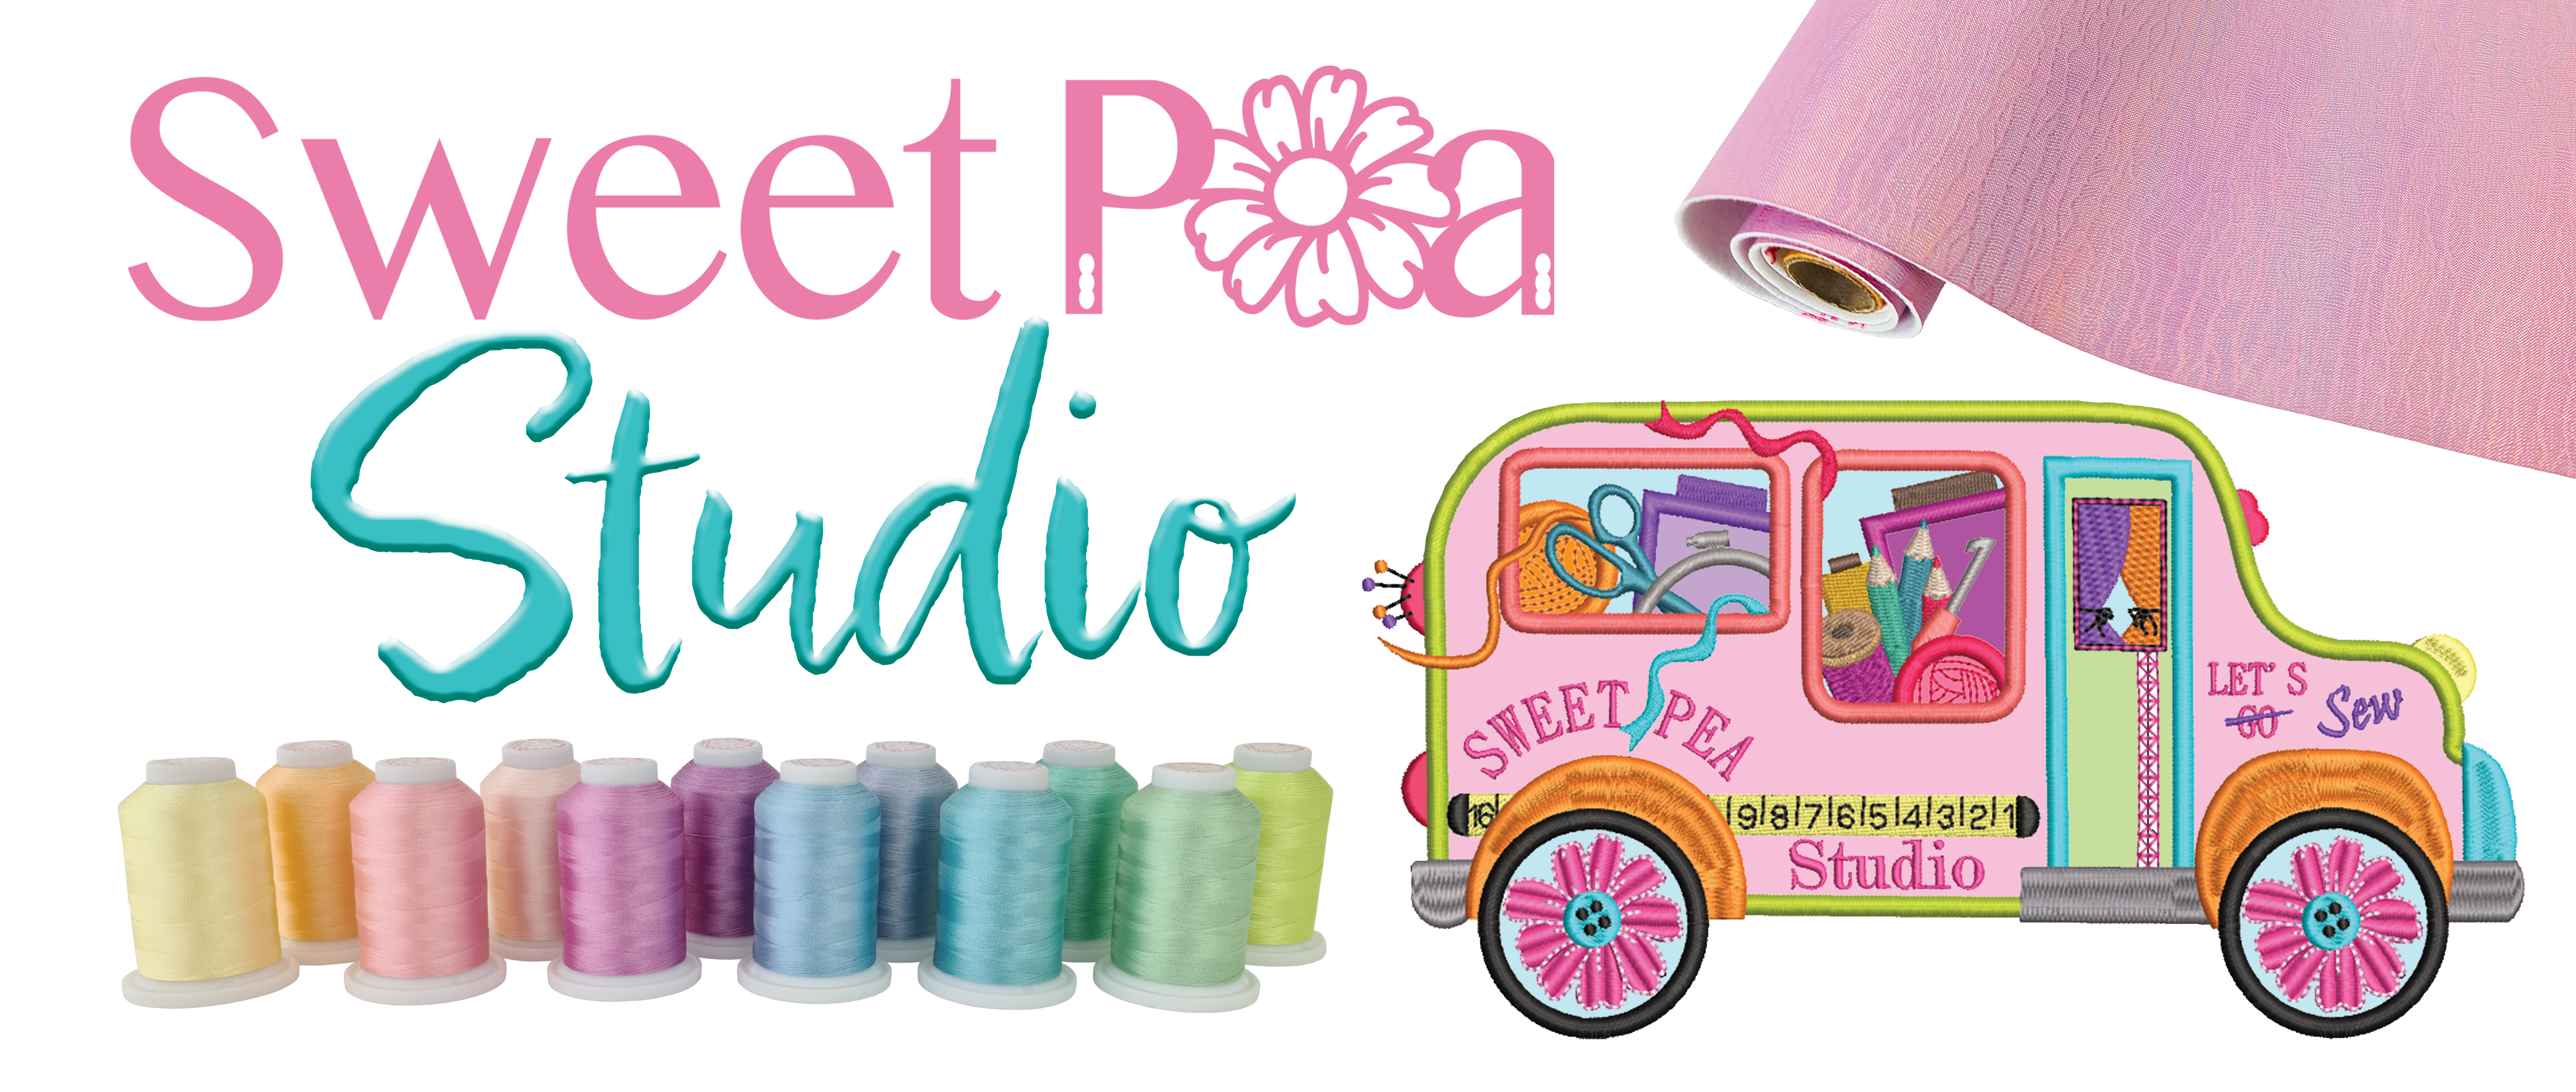 Sweet Pea Studio